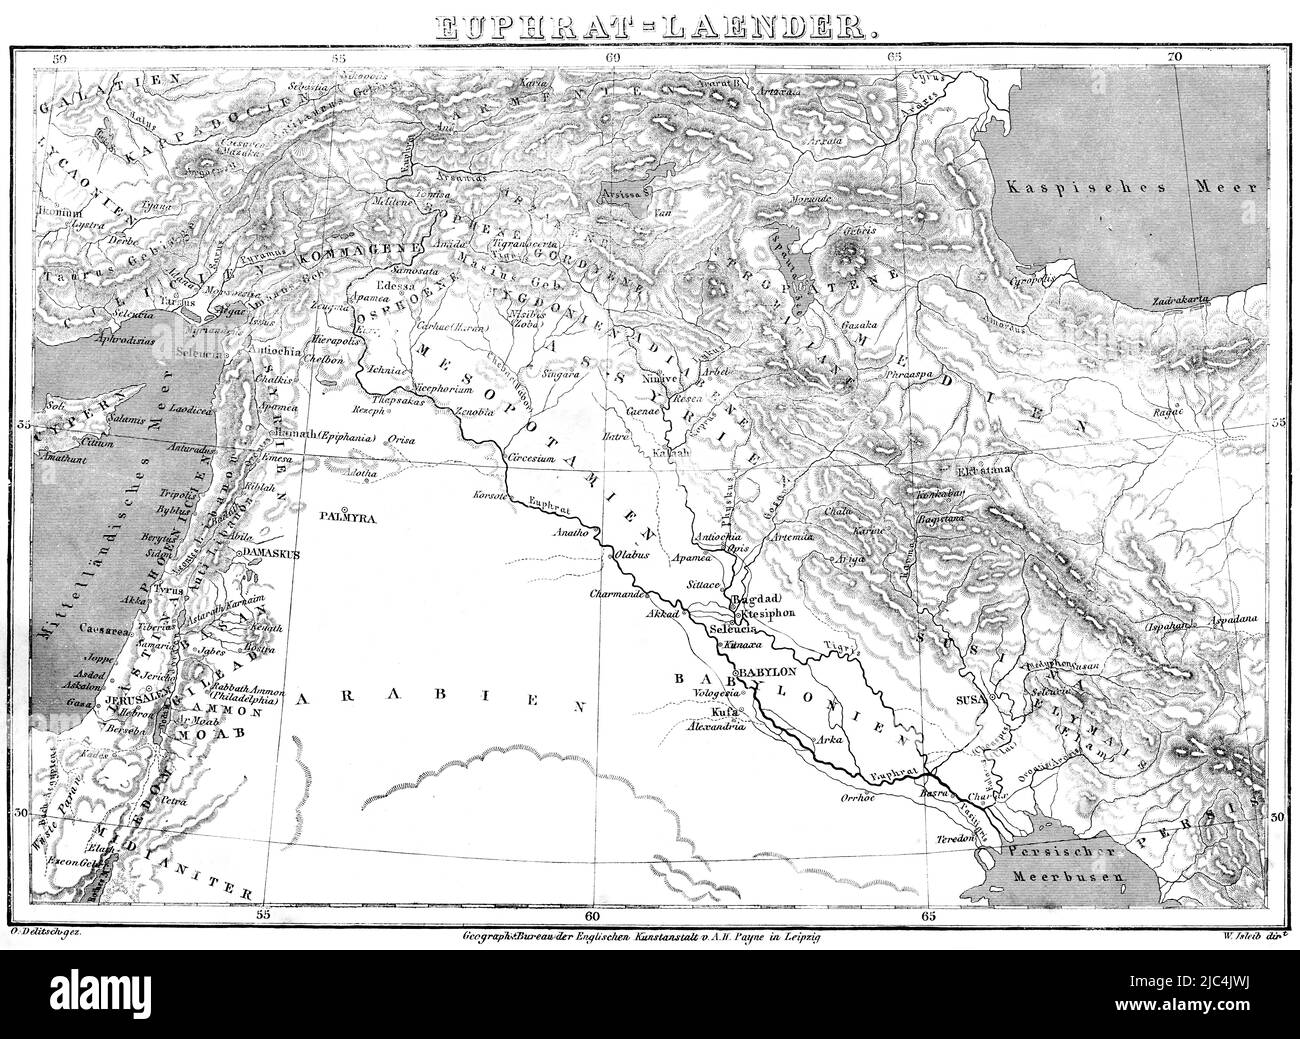 Euphrates countries, map, cartography, Near East, Mediterranean Sea, Caspian Sea, Mesopotamia, Tigris, Palmyra, Arabia, Babylonia, Damascus Stock Photo